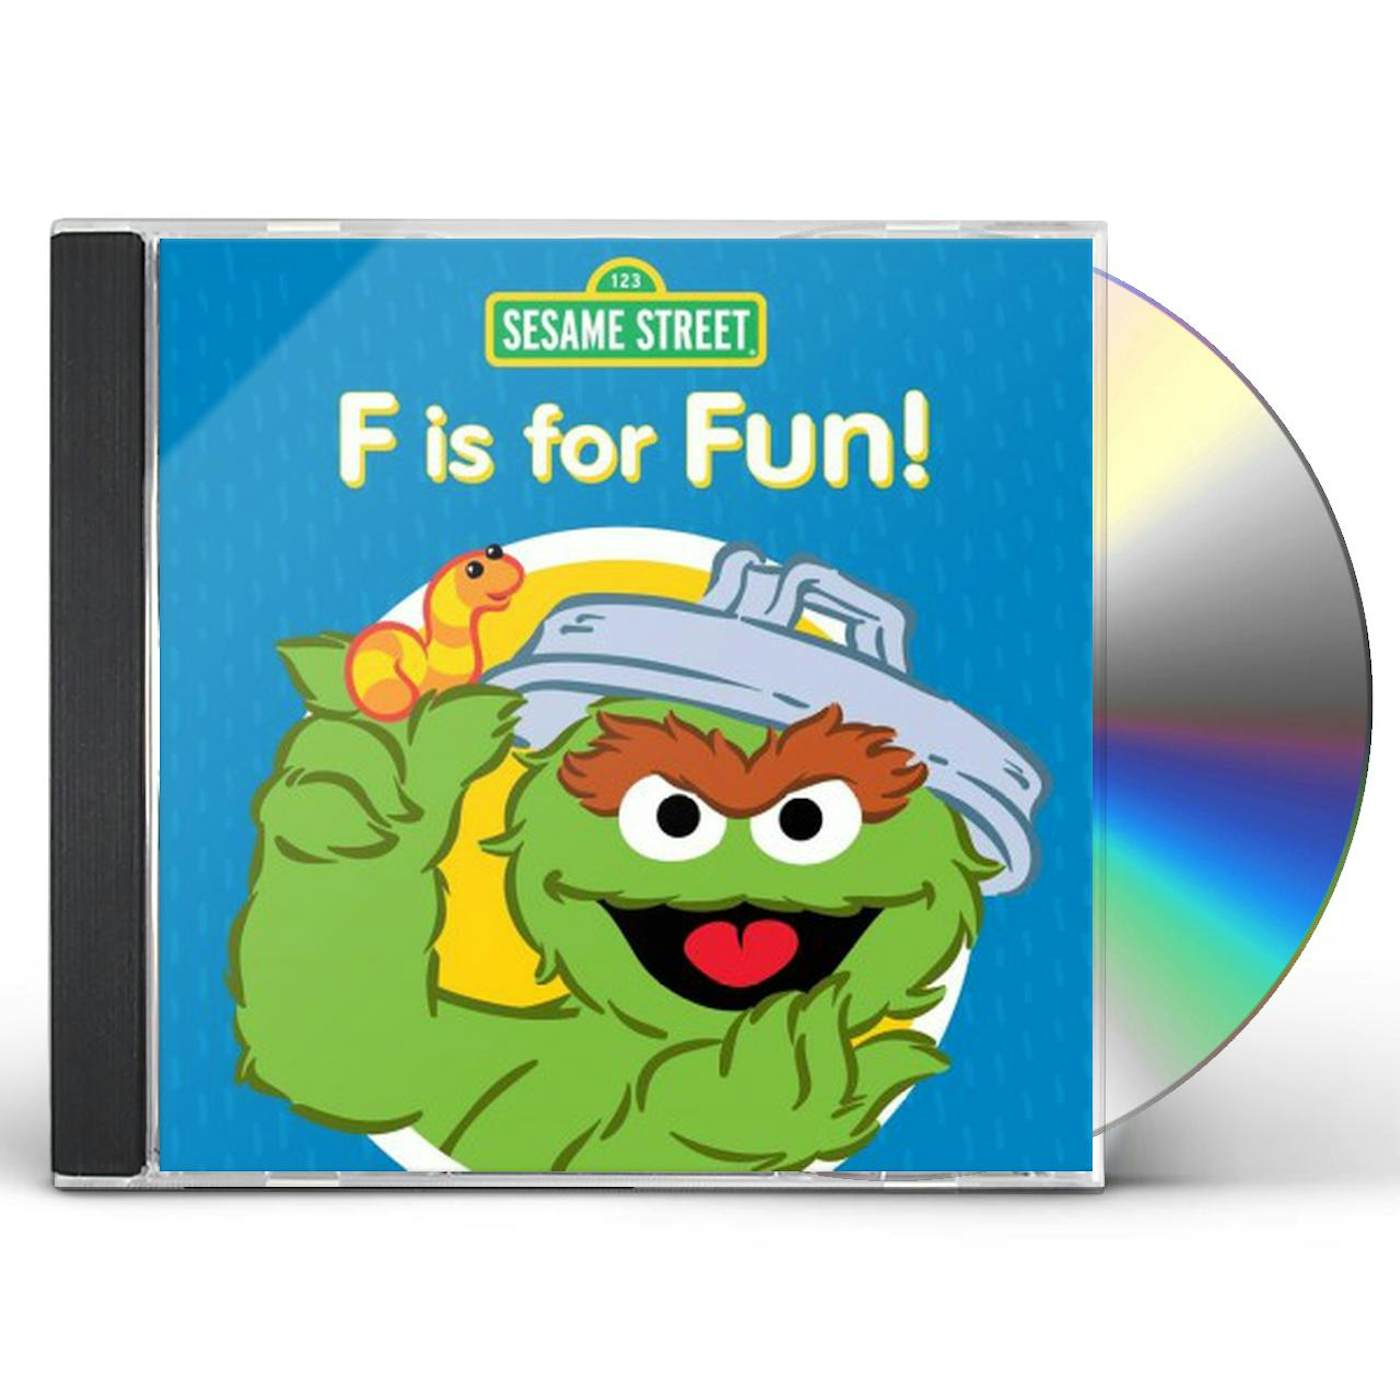 Sesame Street F IS FOR FUN CD